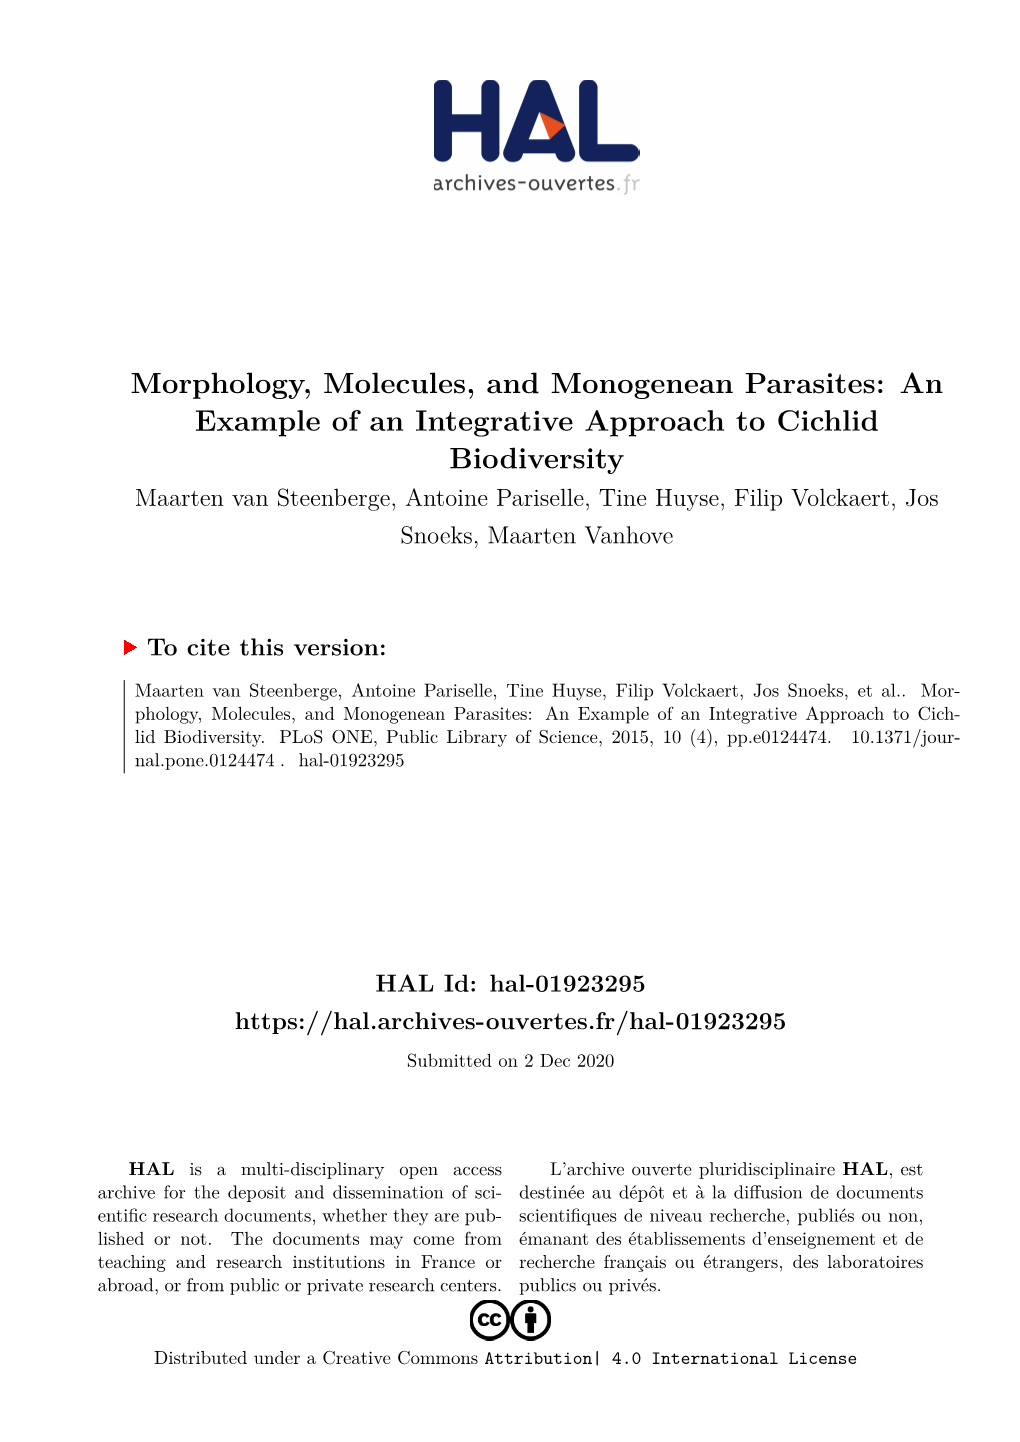 Morphology, Molecules, and Monogenean